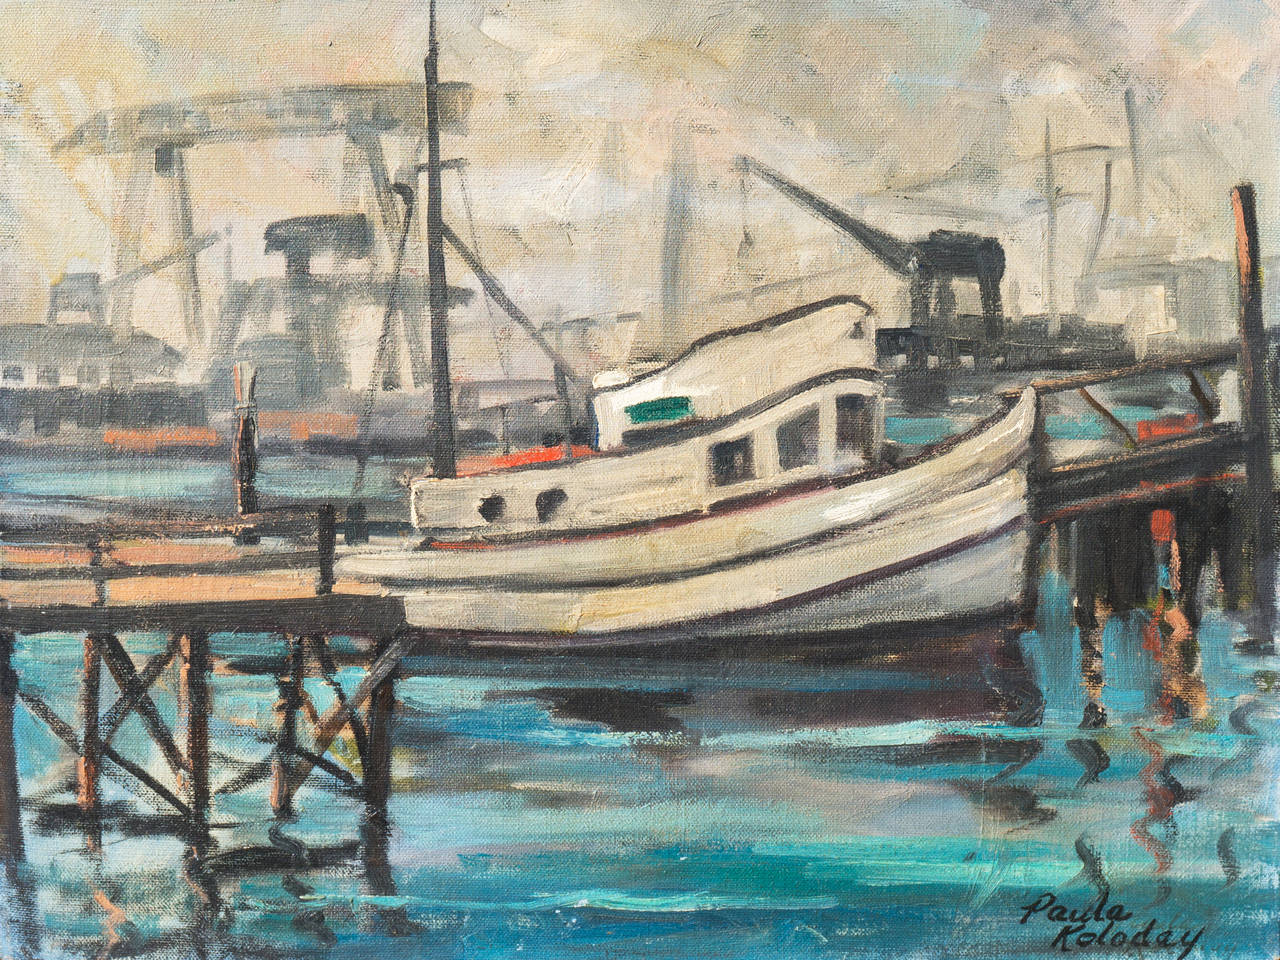 Paula Koloday Landscape Painting - 'Fishing Boat in Harbor', Oakland, California, Woman artist